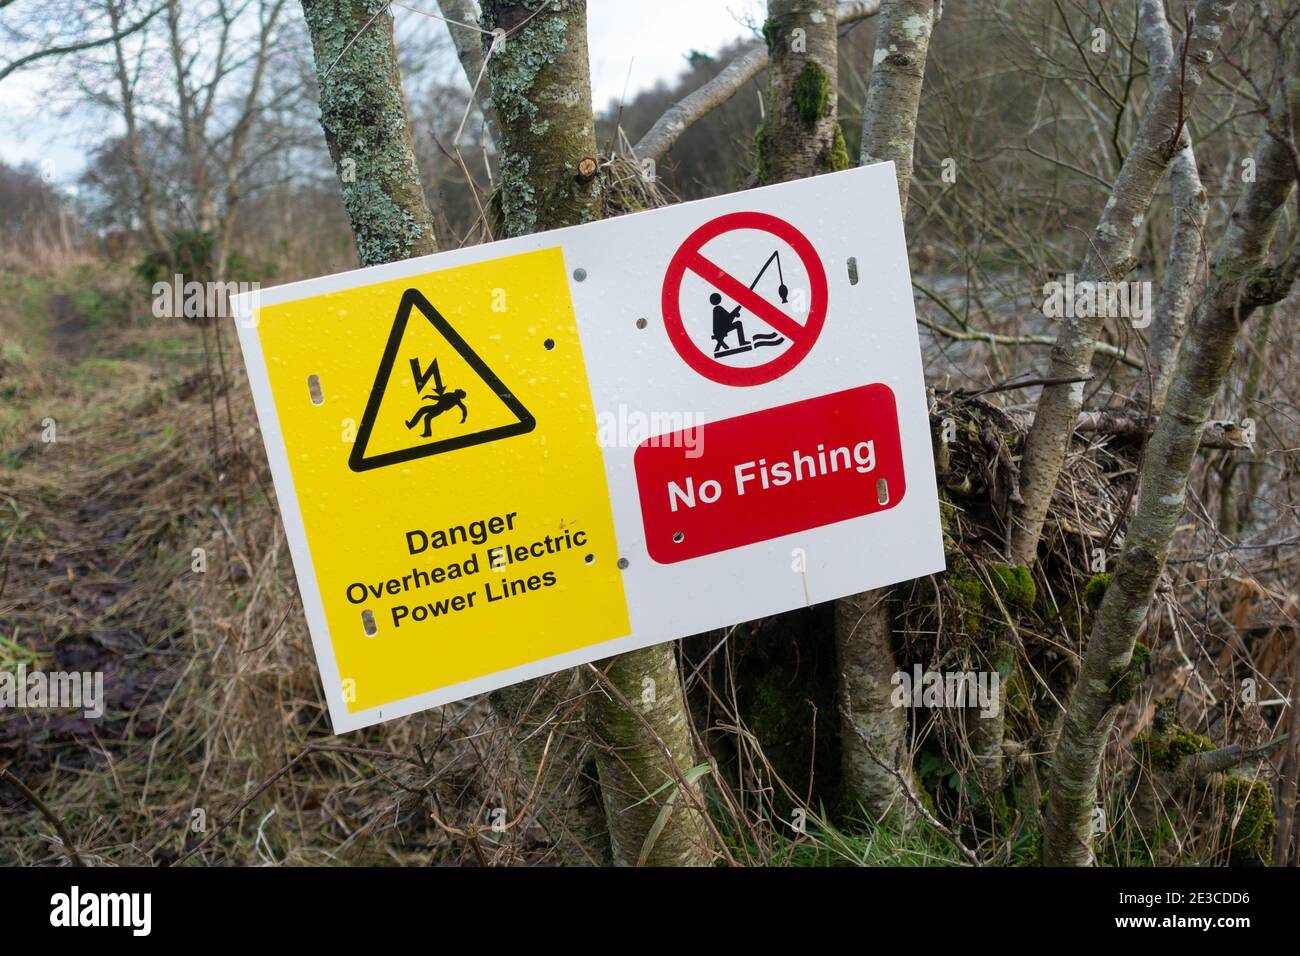 https://c8.alamy.com/comp/2E3CDD6/danger-overhead-electric-power-lines-no-fishing-warning-sign-scotland-uk-2E3CDD6.jpg